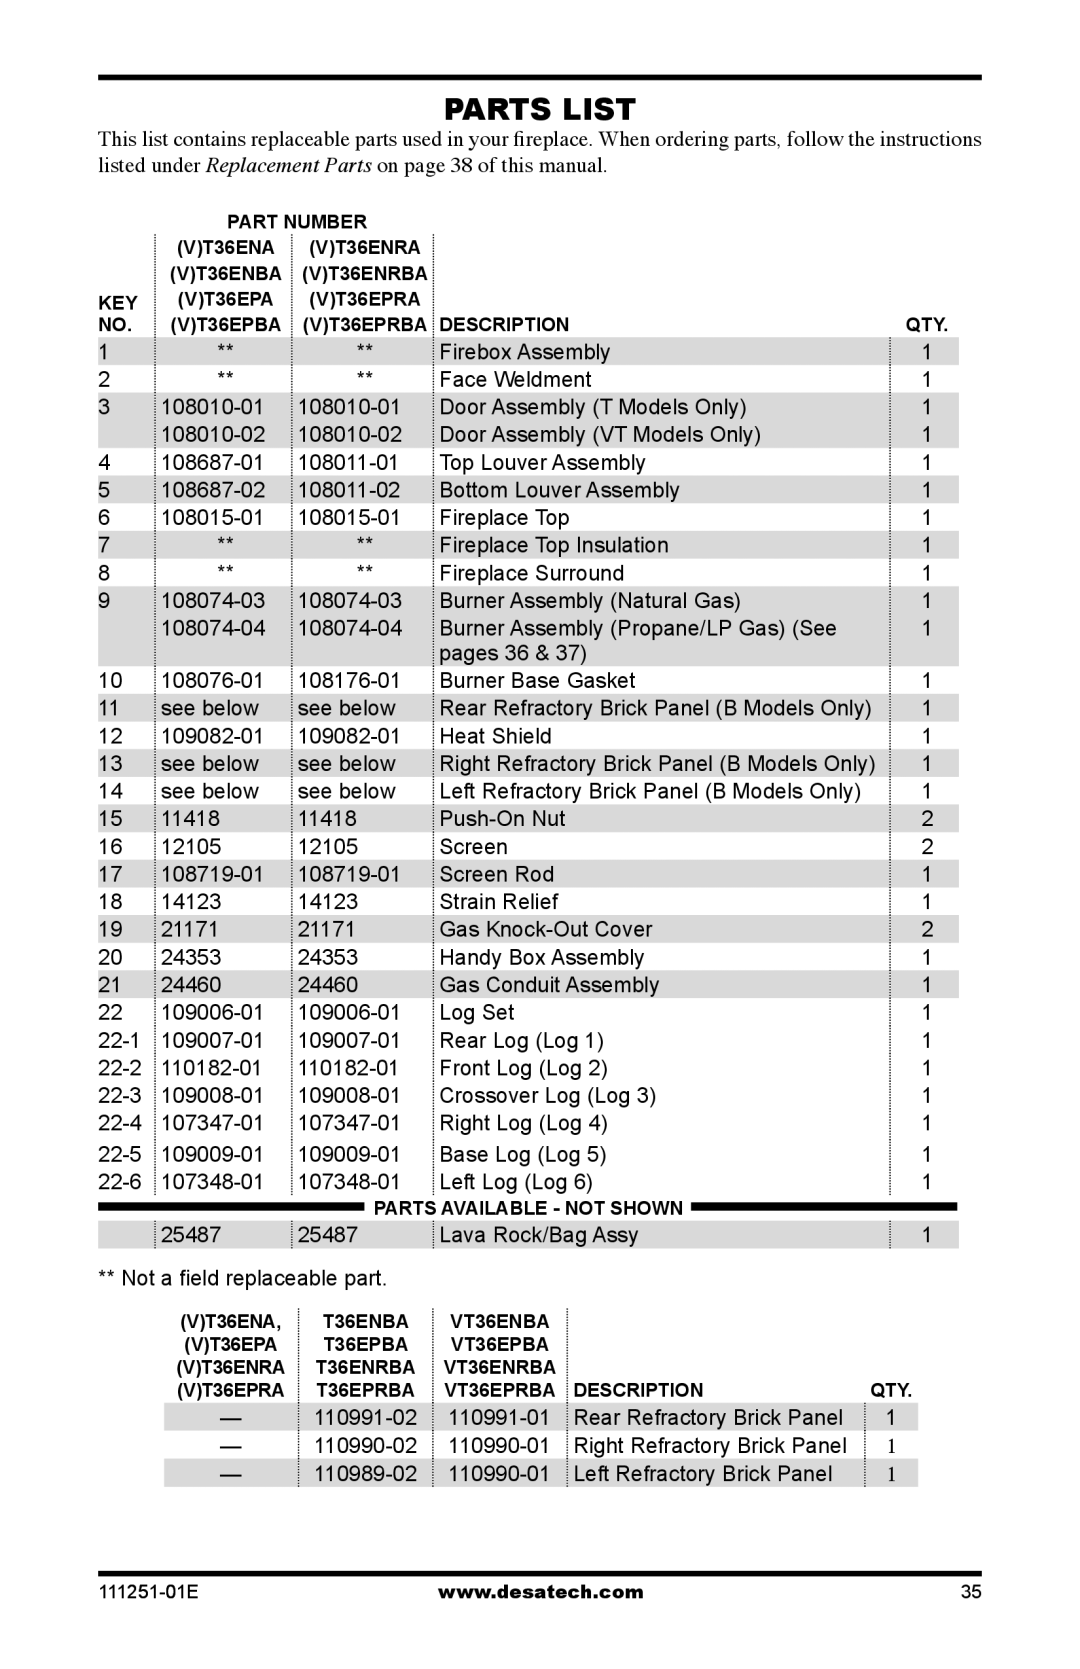 Desa (V)T36EPA installation manual Parts List 